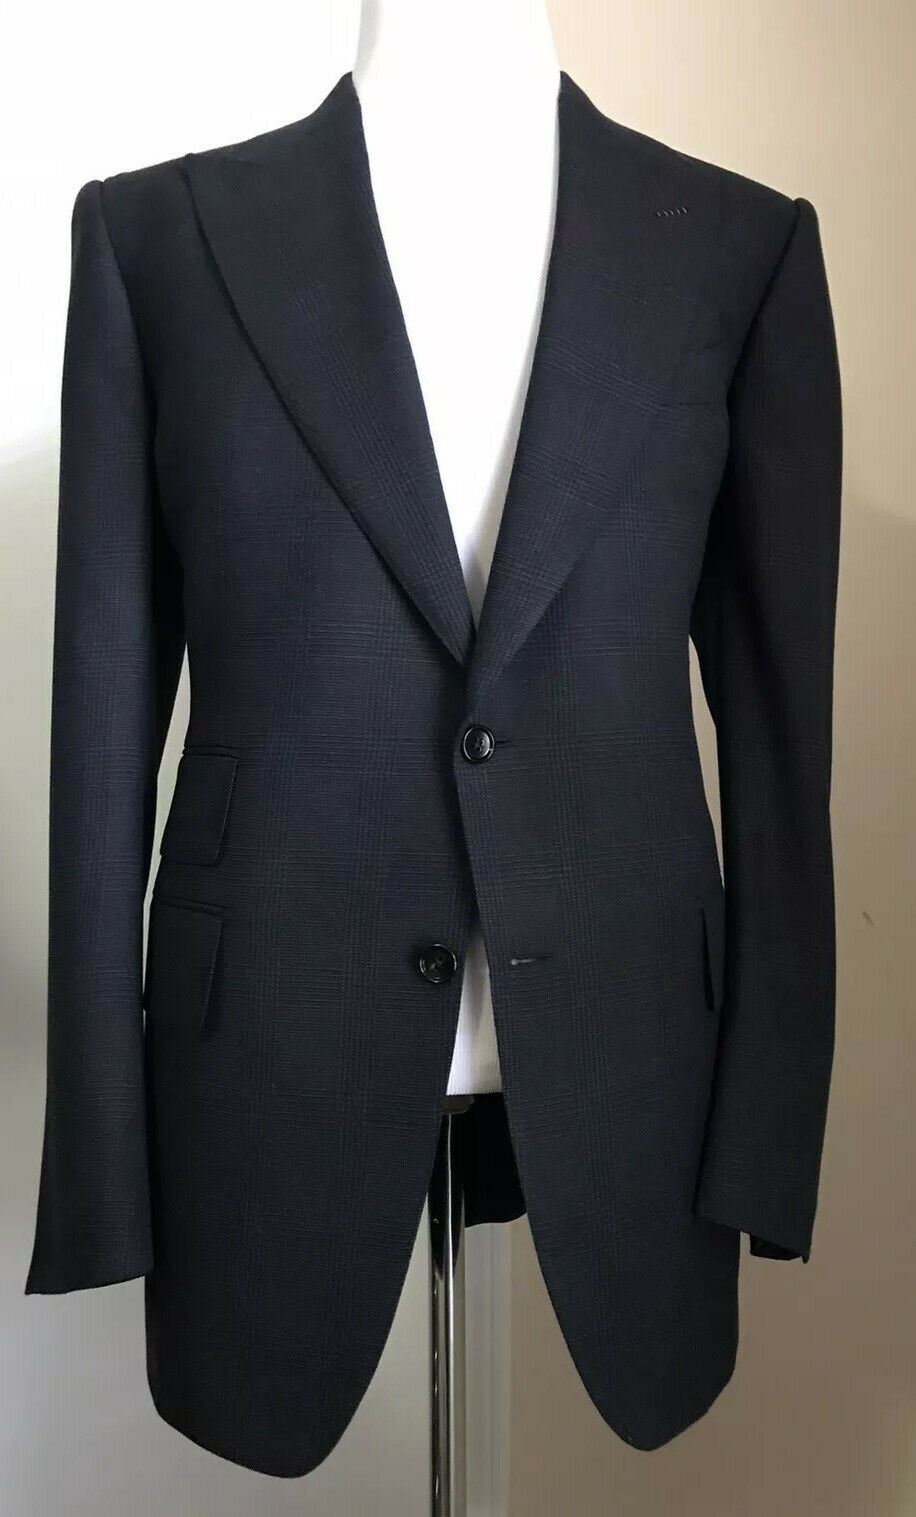 NWT $3770 TOM FORD Men Windsor Sport Coat Jacket Blazer Navy 43R US/54 Eu